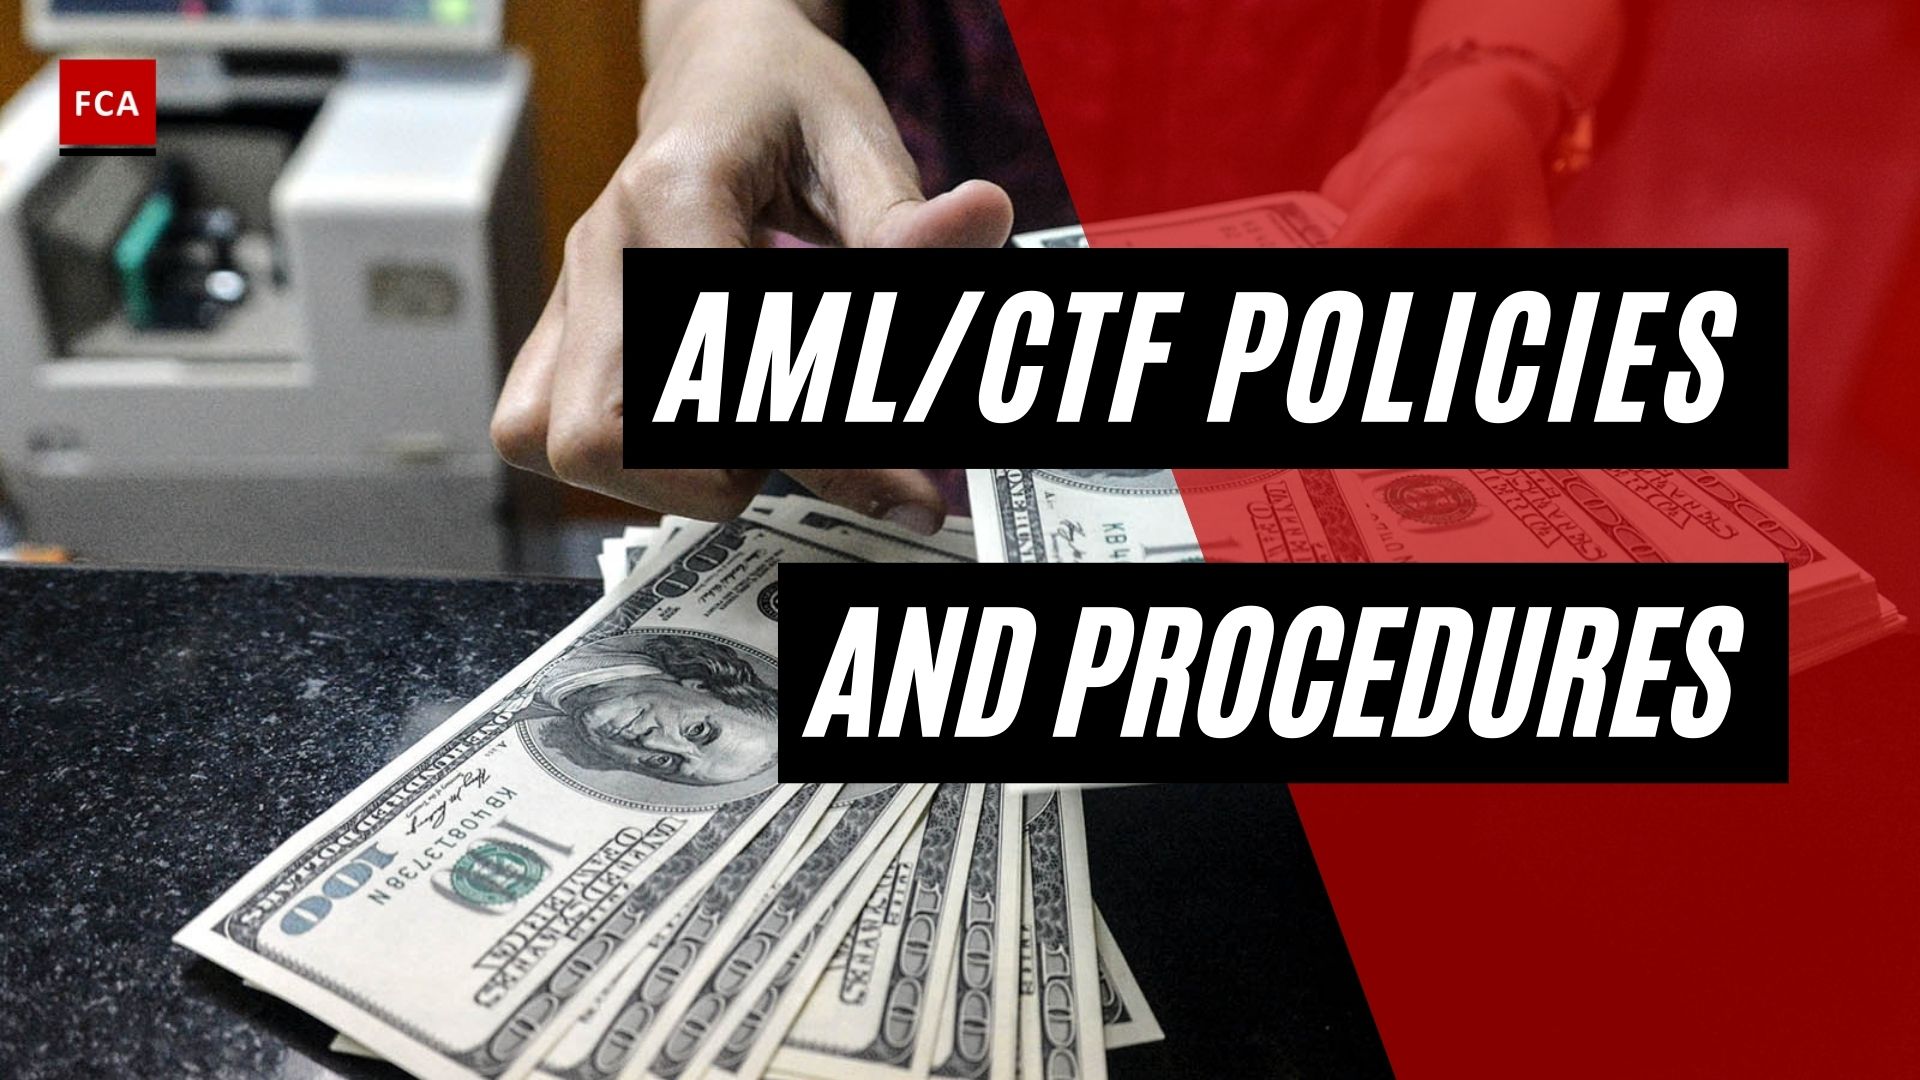 Aml/Ctf Policies And Procedures